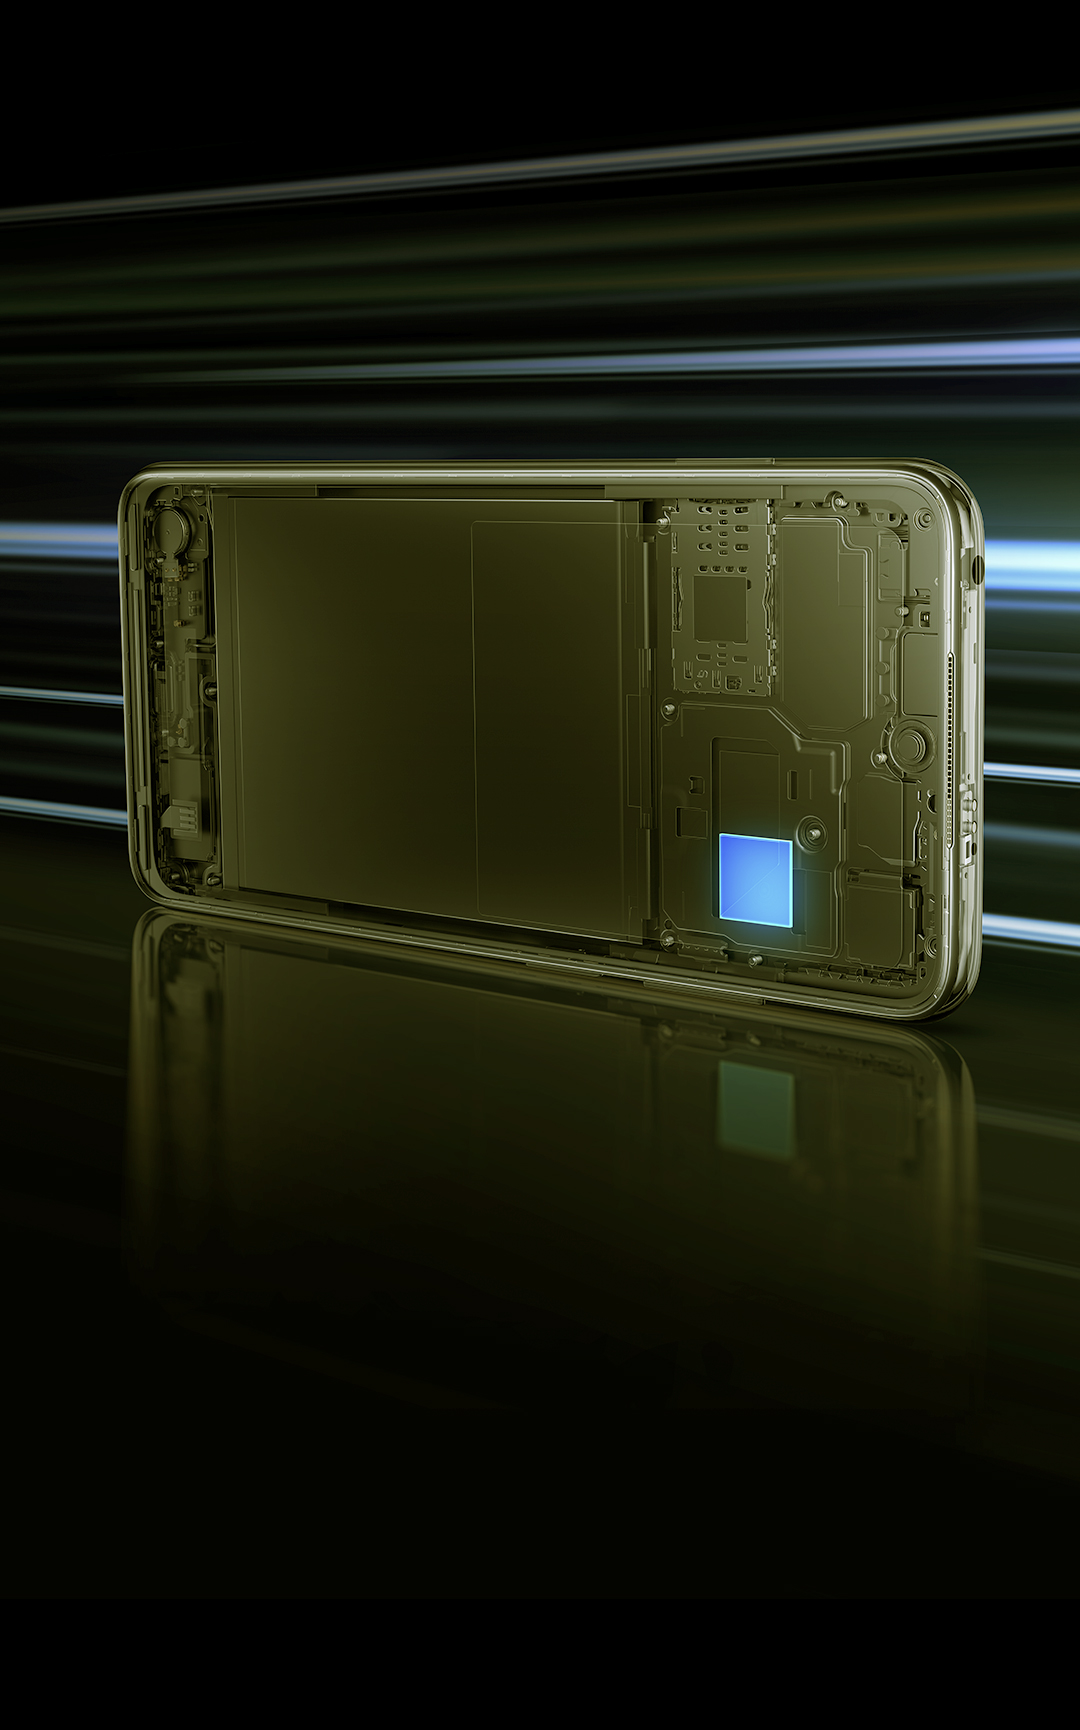 Redmi Note 10T 5G | Fast and Futuristic